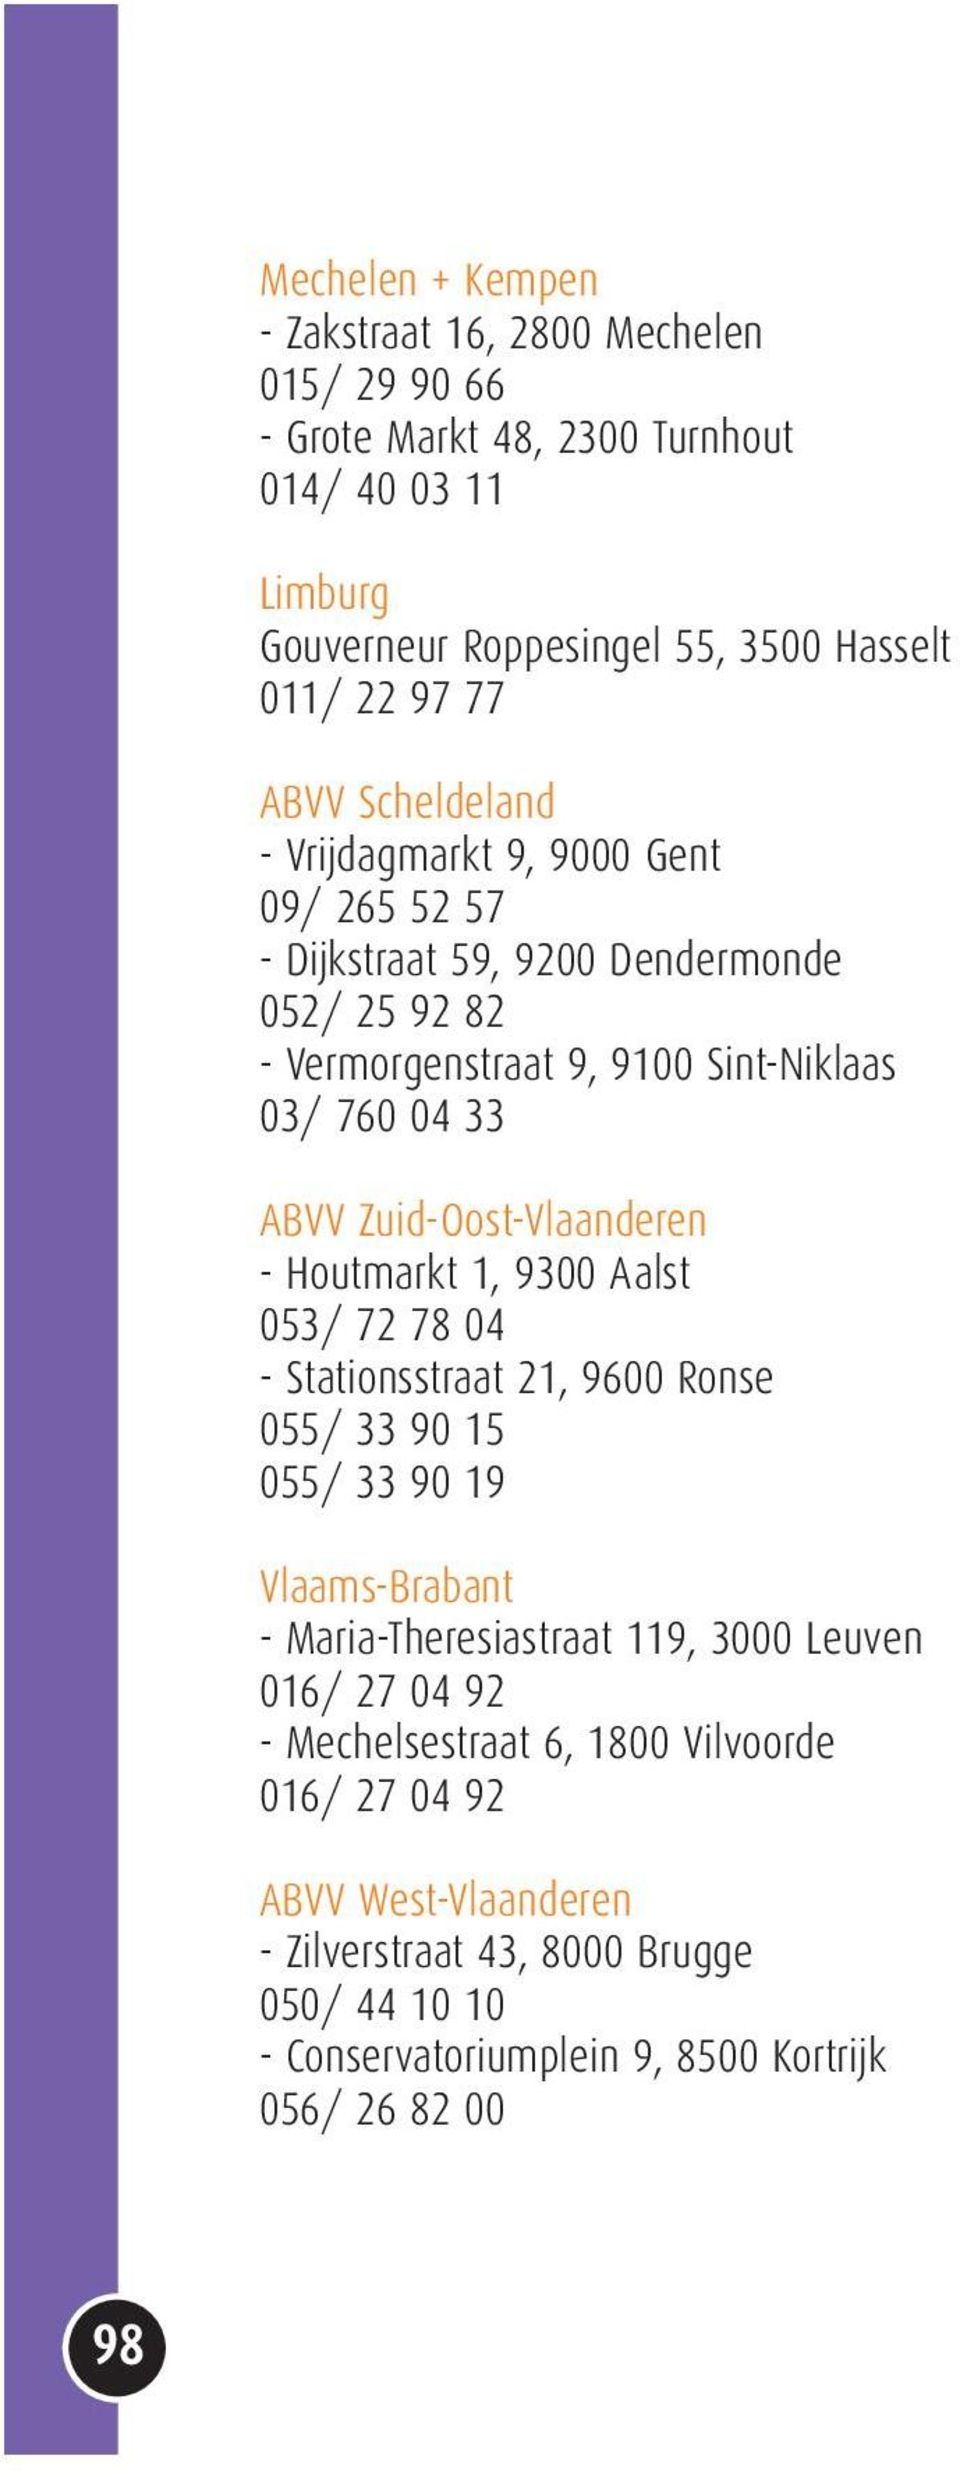 Zuid-Oost-Vlaanderen - Houtmarkt 1, 9300 Aalst 053/ 72 78 04 - Stationsstraat 21, 9600 Ronse 055/ 33 90 15 055/ 33 90 19 Vlaams-Brabant - Maria-Theresiastraat 119, 3000